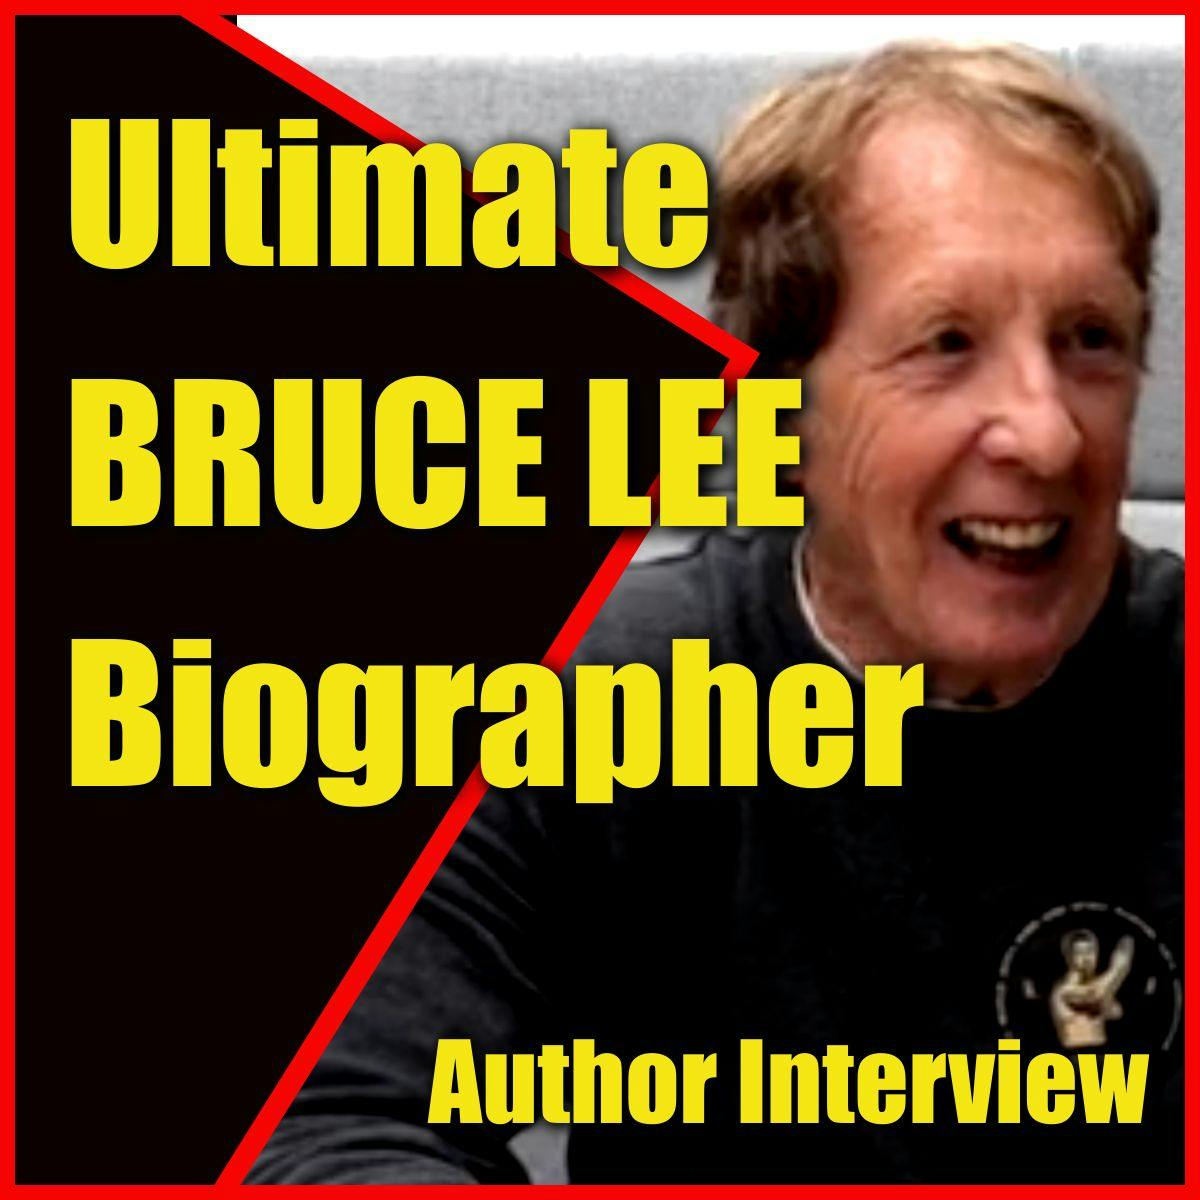 Ultimate BRUCE LEE Biographer